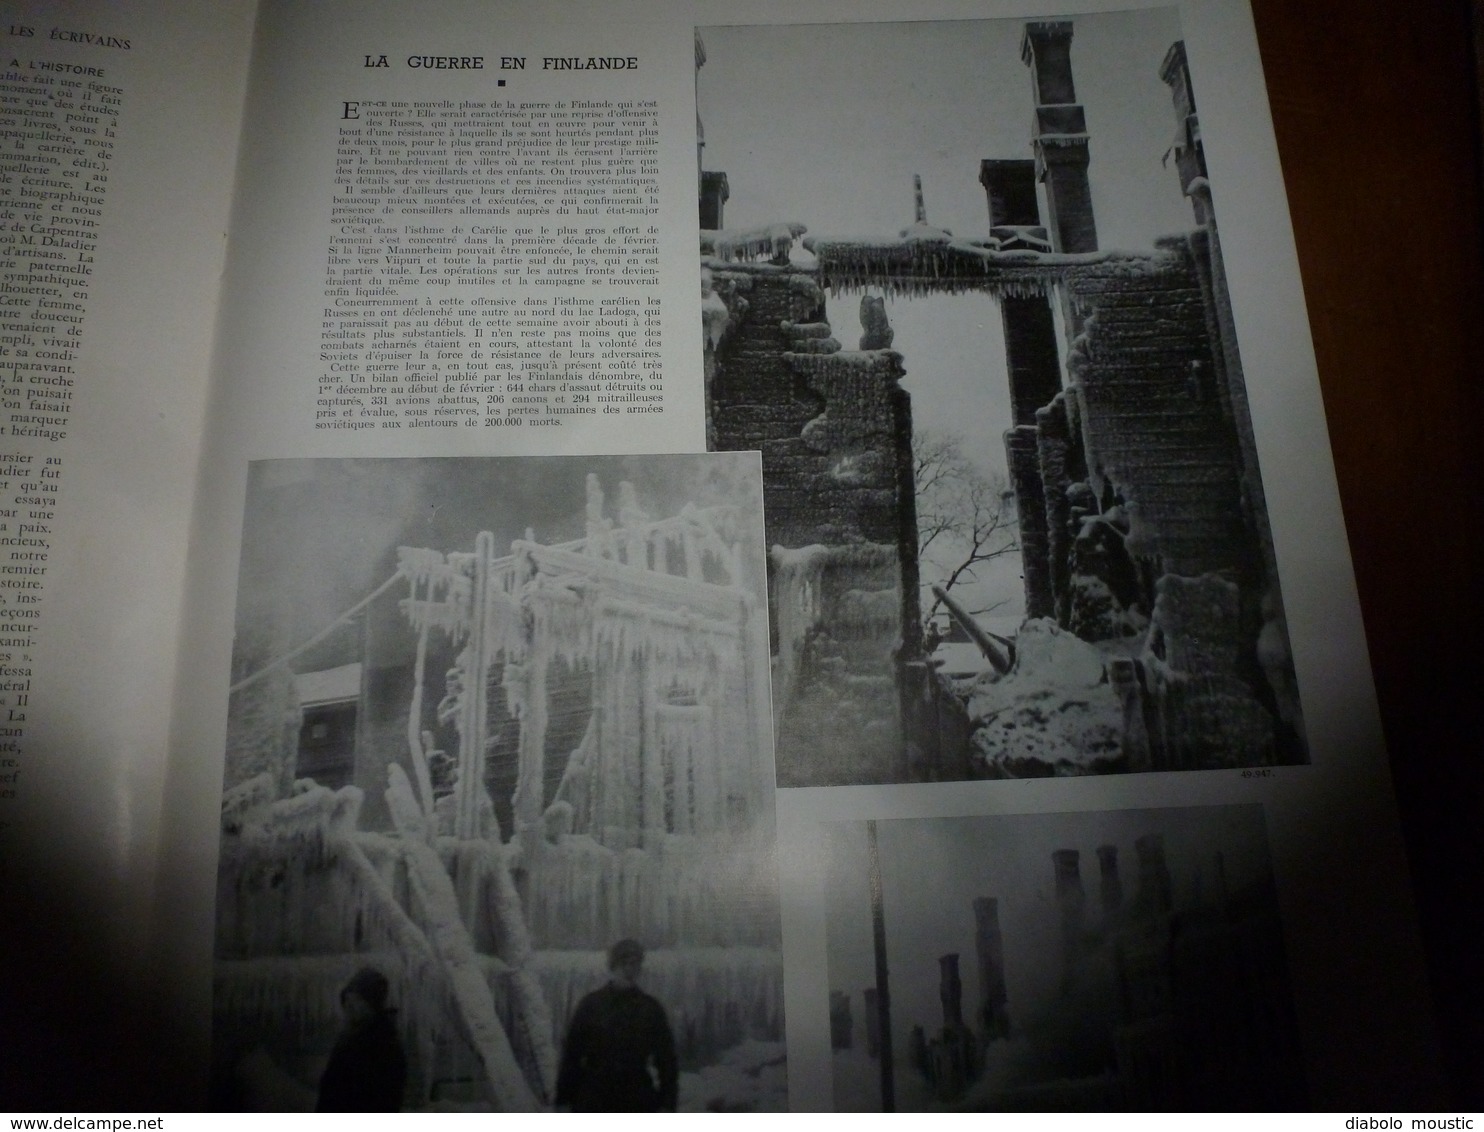 1940 L'ILLUSTRATION :Lord GORT ; British Army; La Finlande héroïque sous les bombes;Kiruna; Norfolk; Mannerheim ;etc